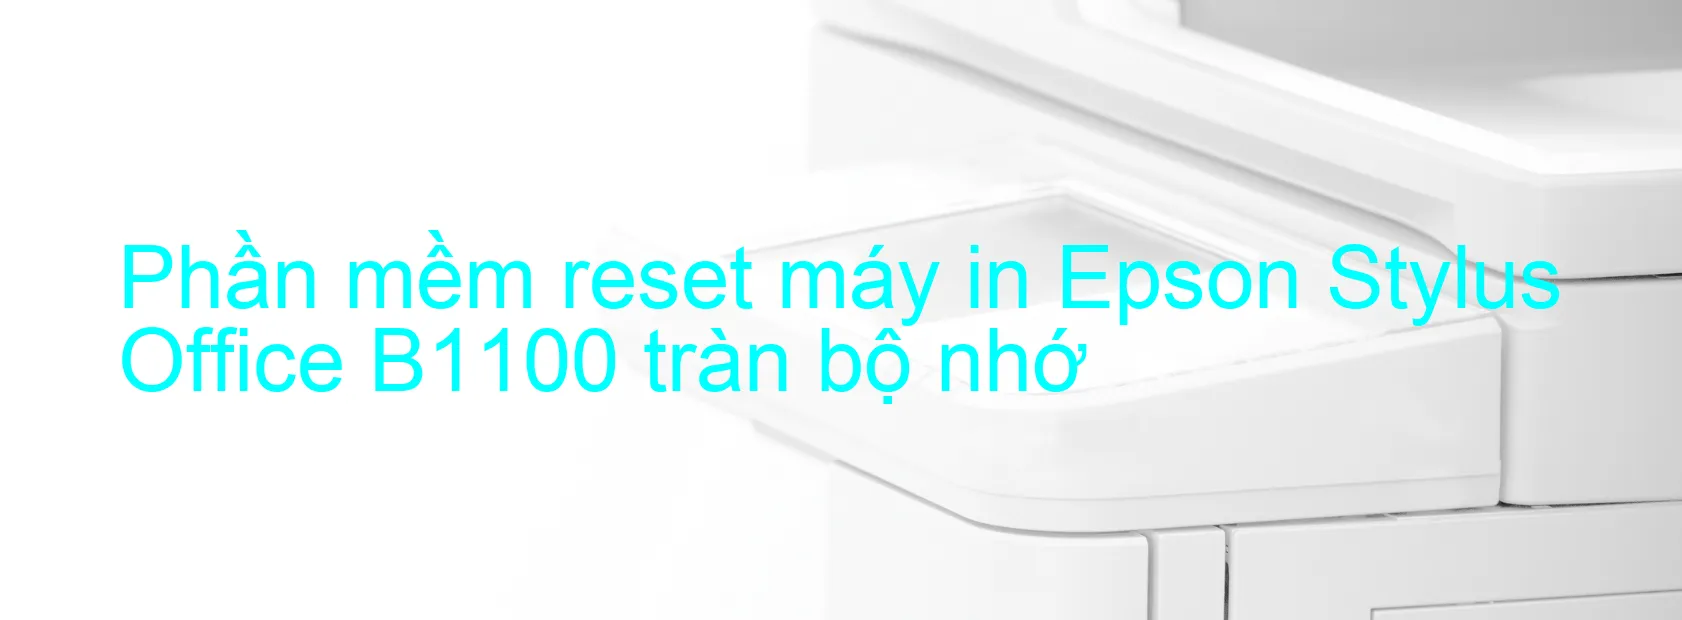 phan-mem-reset-may-in-epson-stylus-office-b1100-tran-bo-nho.webp